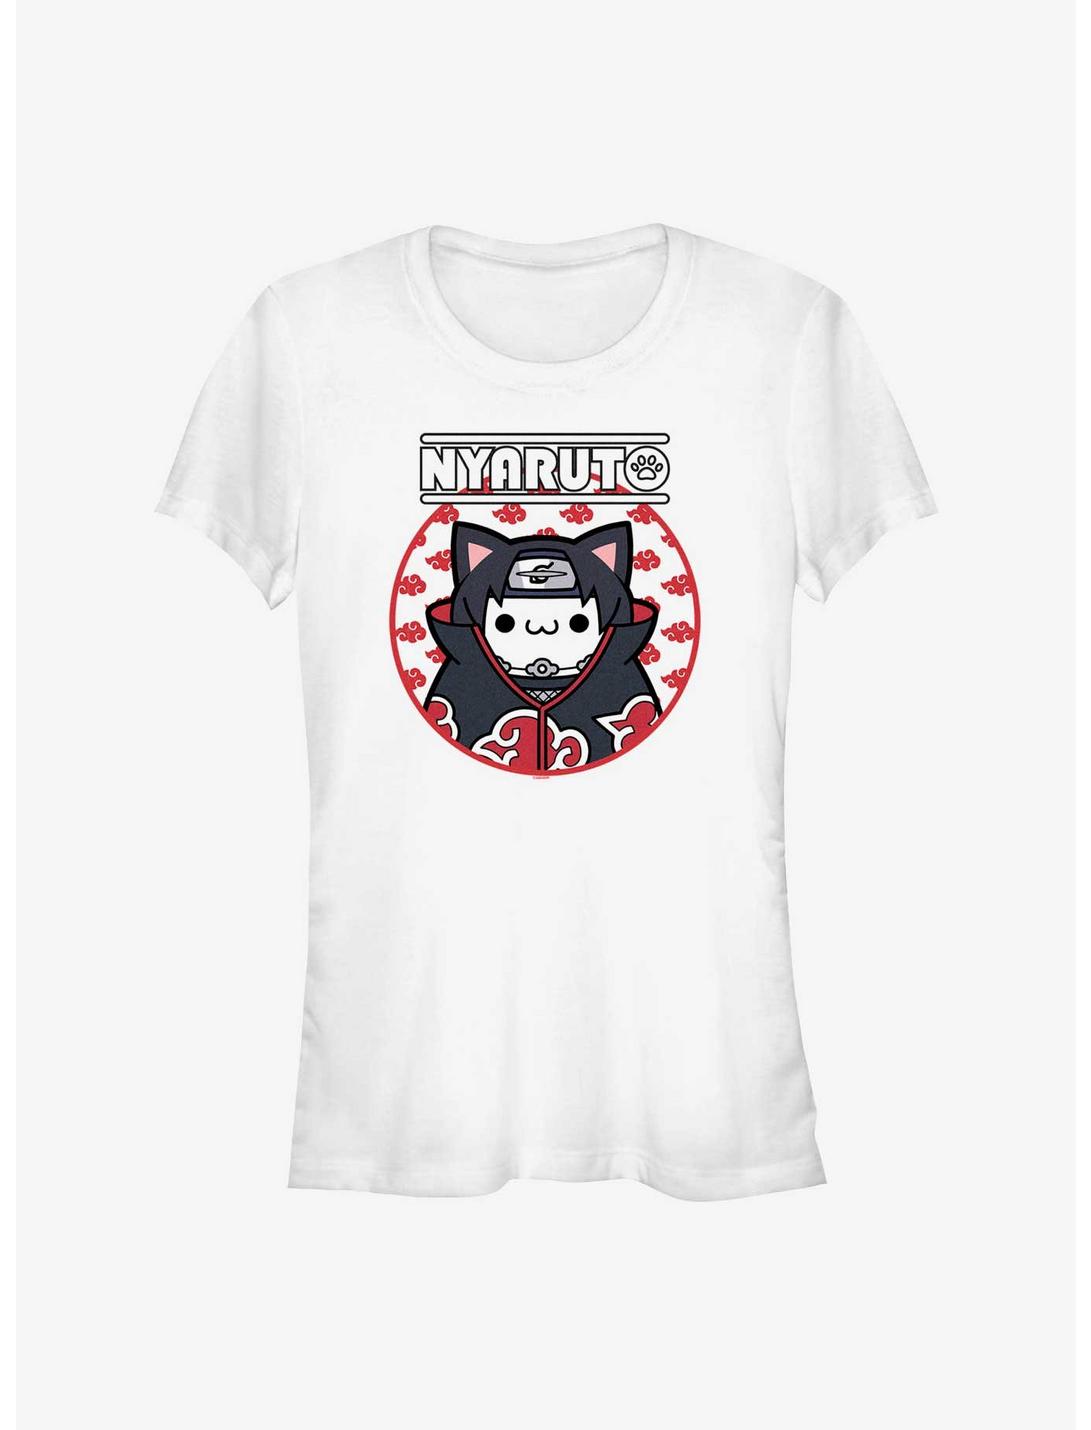 Naruto Nyaruto Itachi Cat Girls T-Shirt, WHITE, hi-res